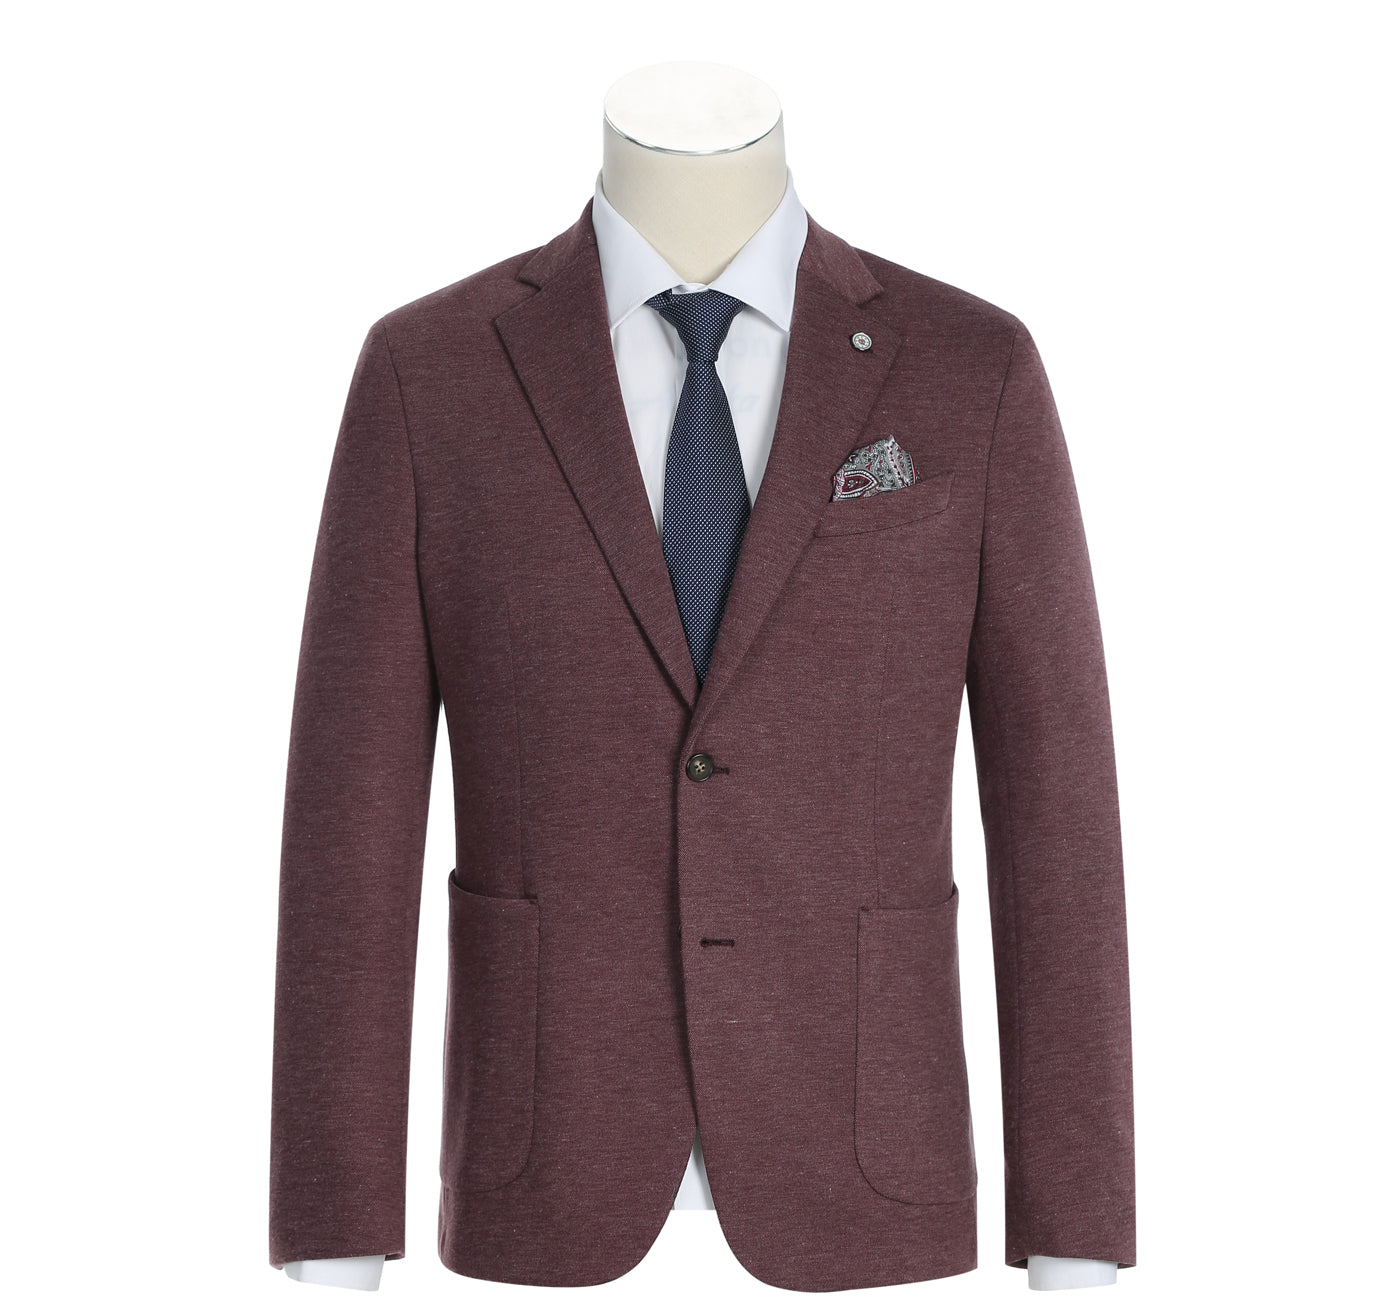 Men's Slim Fit Half-Canvas Solid Brick Red Suit Jacket